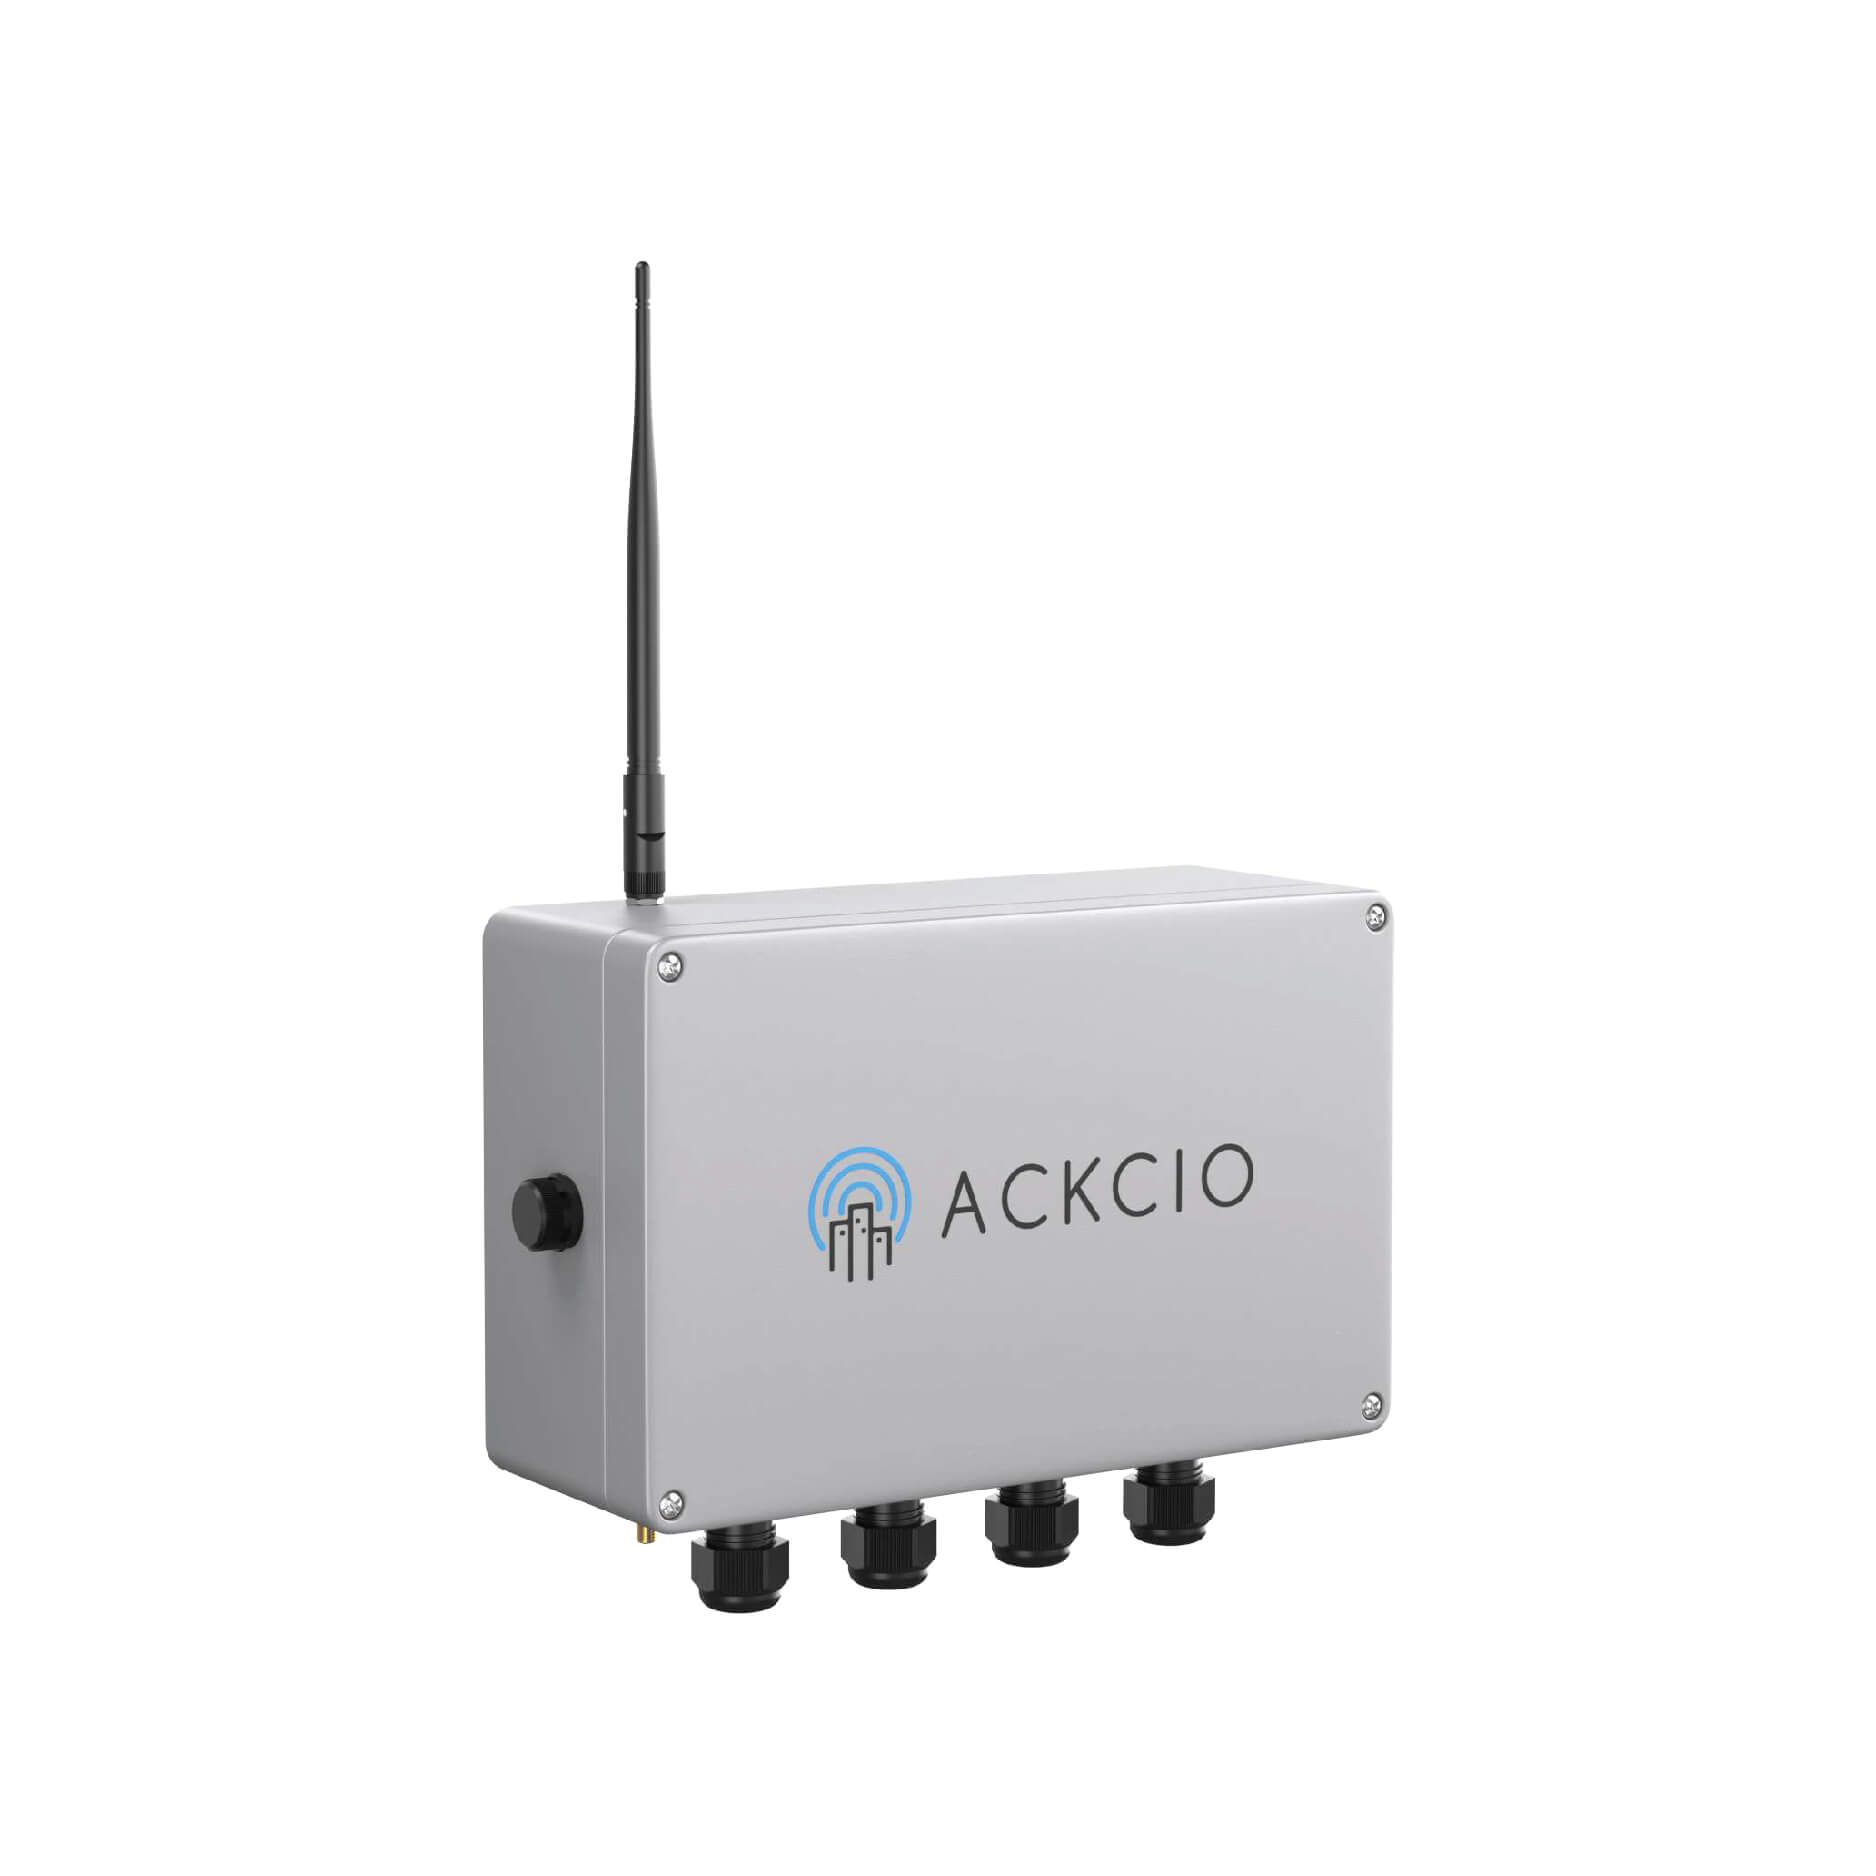 Thiết bị thu thập dữ liệu không dây Ackcio Digital Nodes BEAM-DG